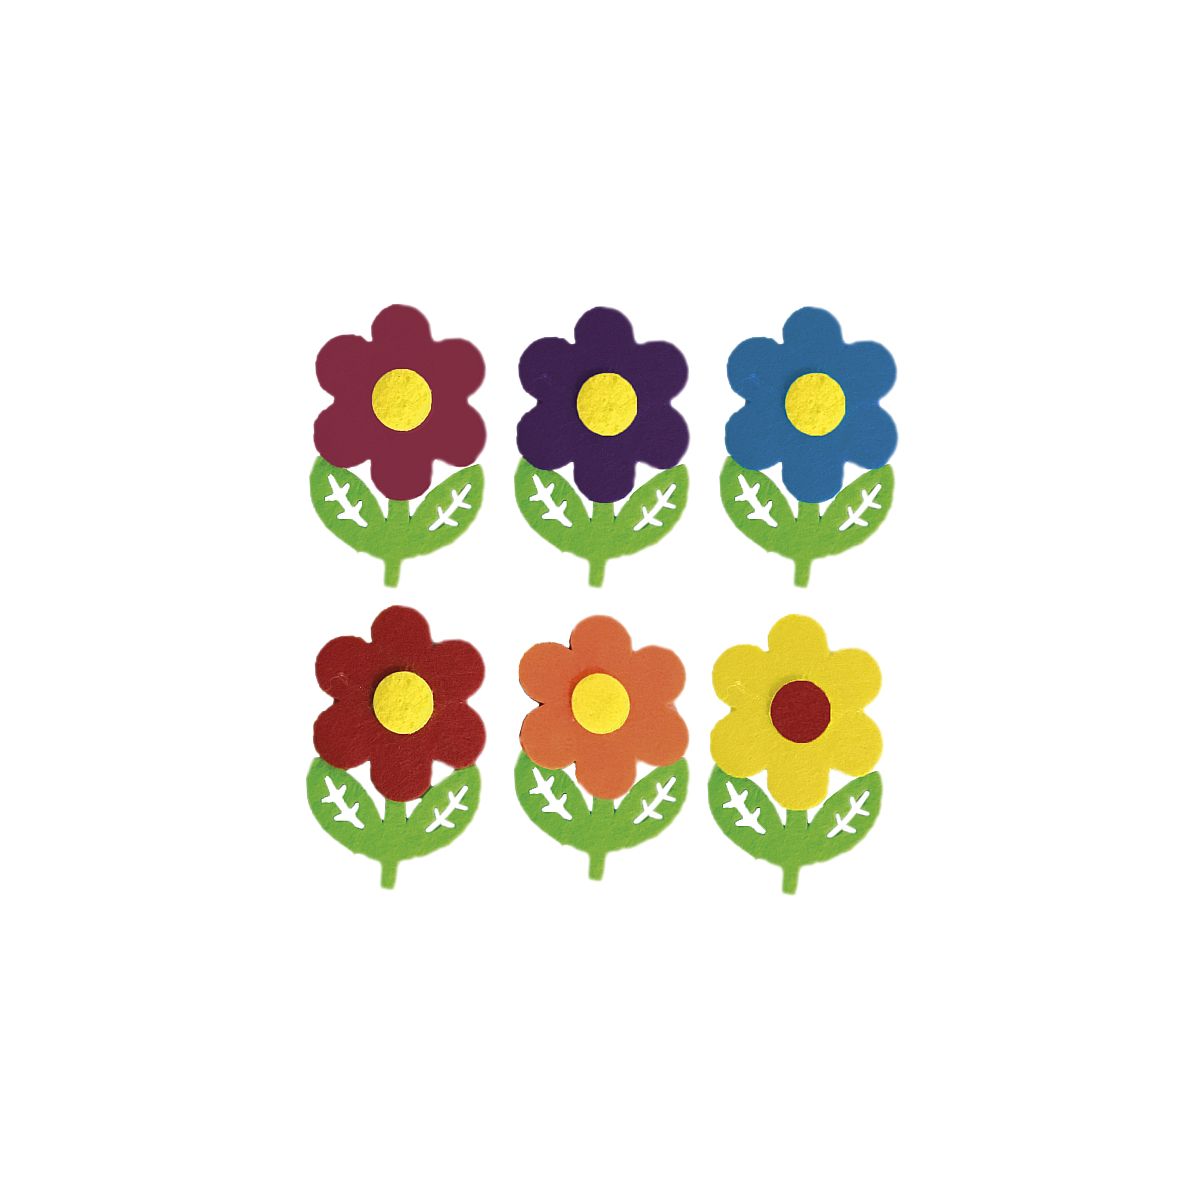 Ozdoba filcowa Titanum Craft-Fun Series Kwiaty 3D (3633)